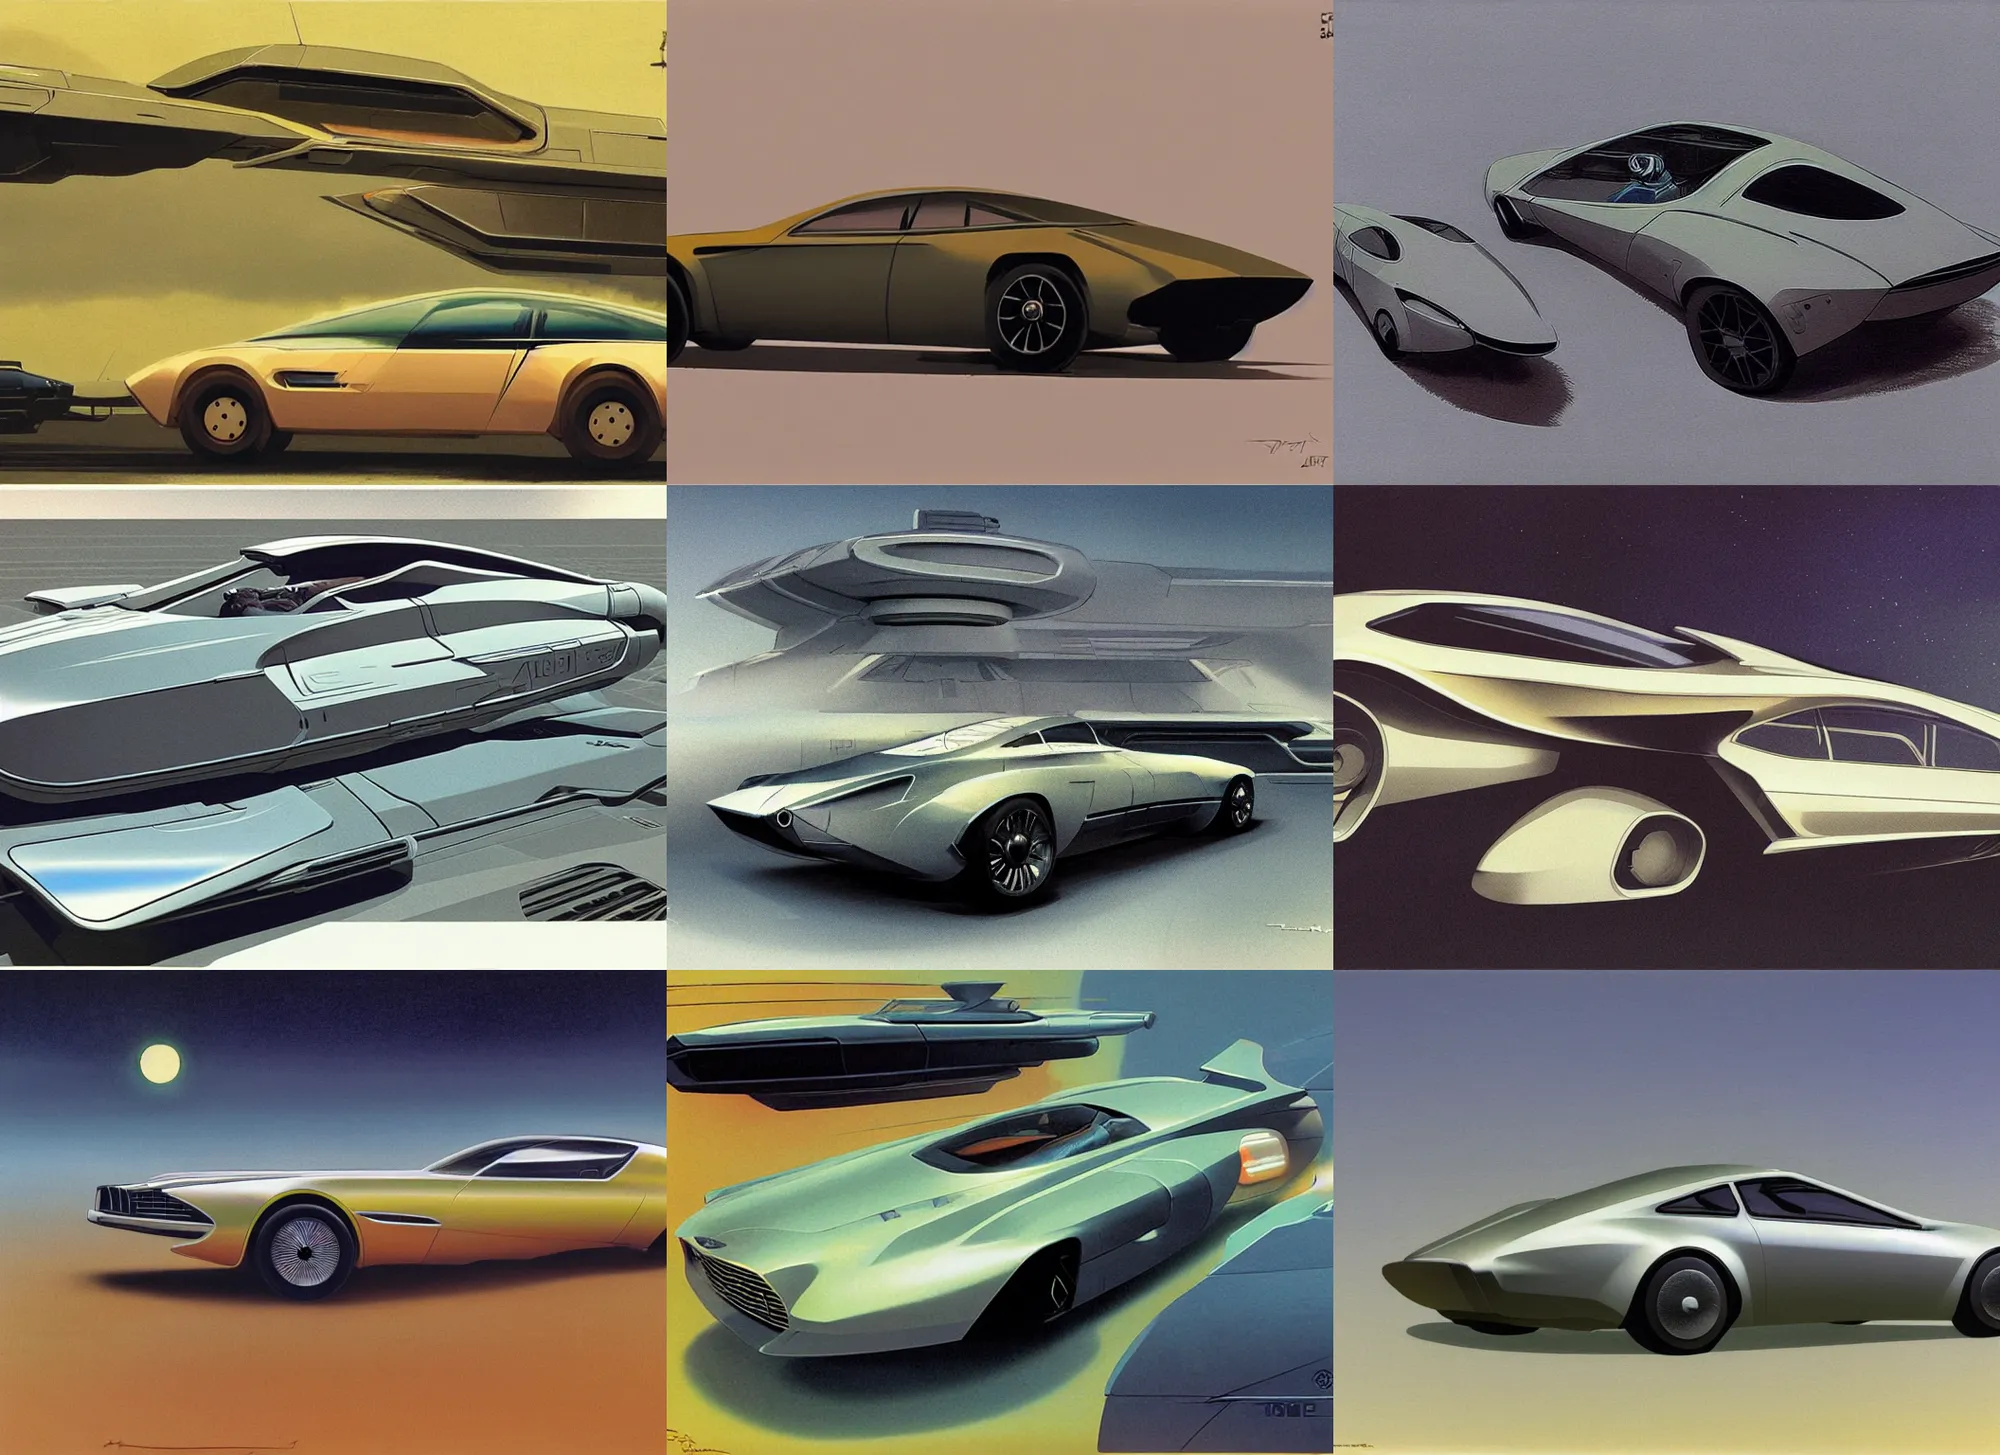 Prompt: futuristic Aston Martin (2053), concept art, Dan McPharlin, Ralph McQuarrie